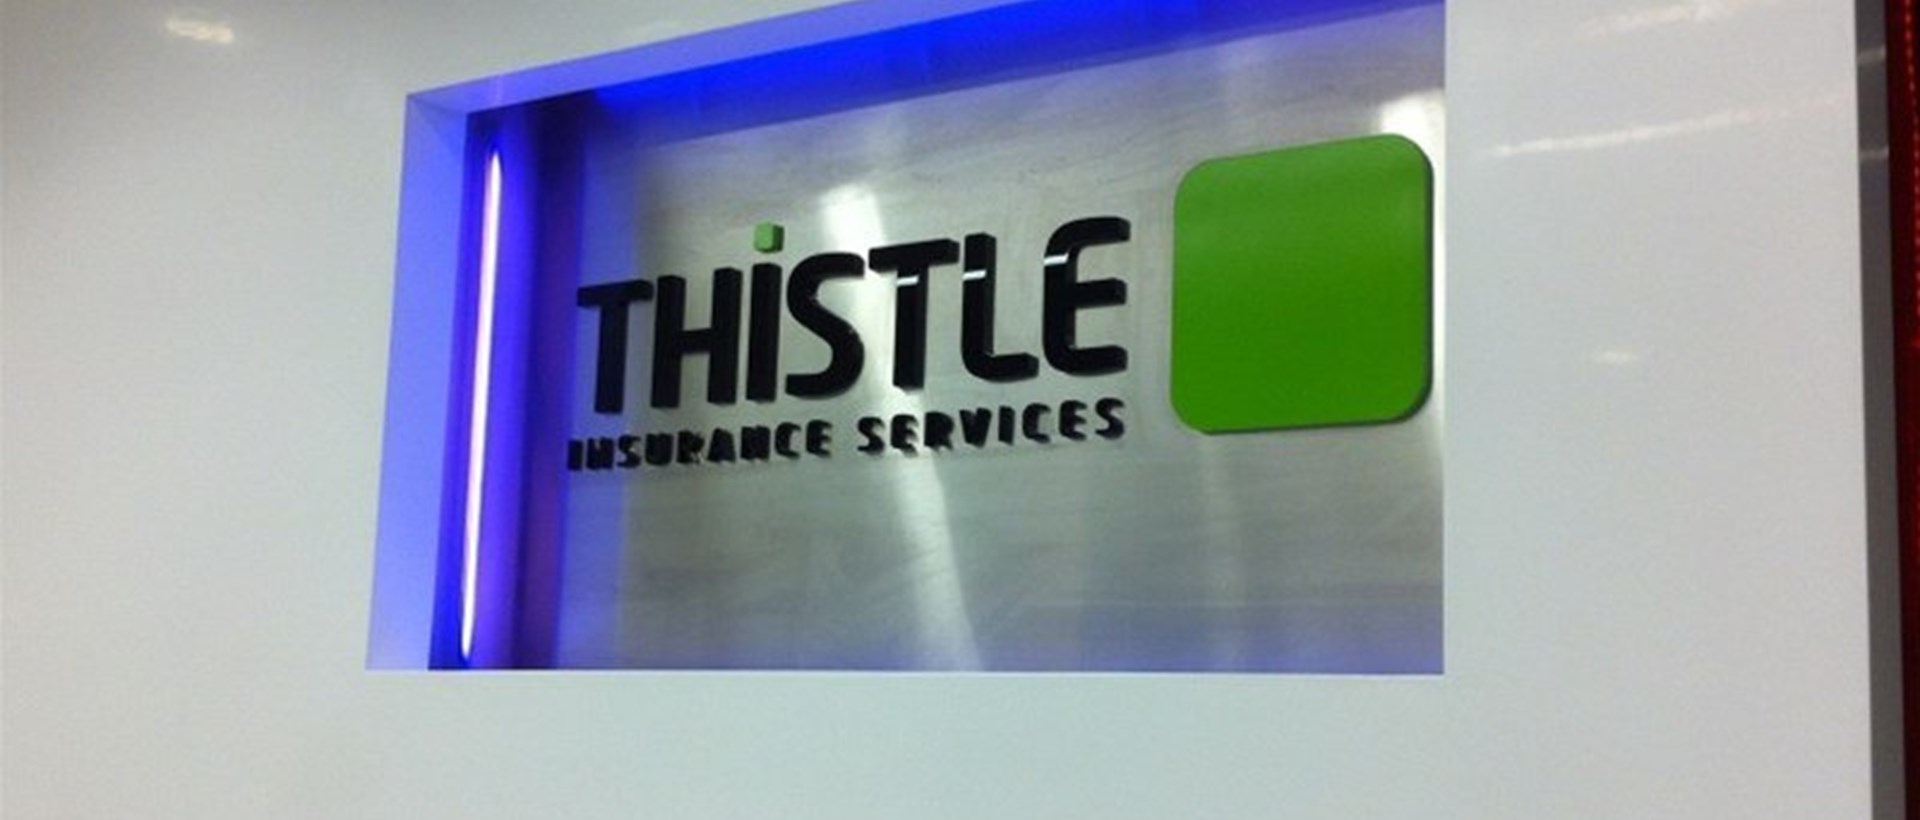 Thistle Insurance Services Illuminated Interior Sign Gloucester